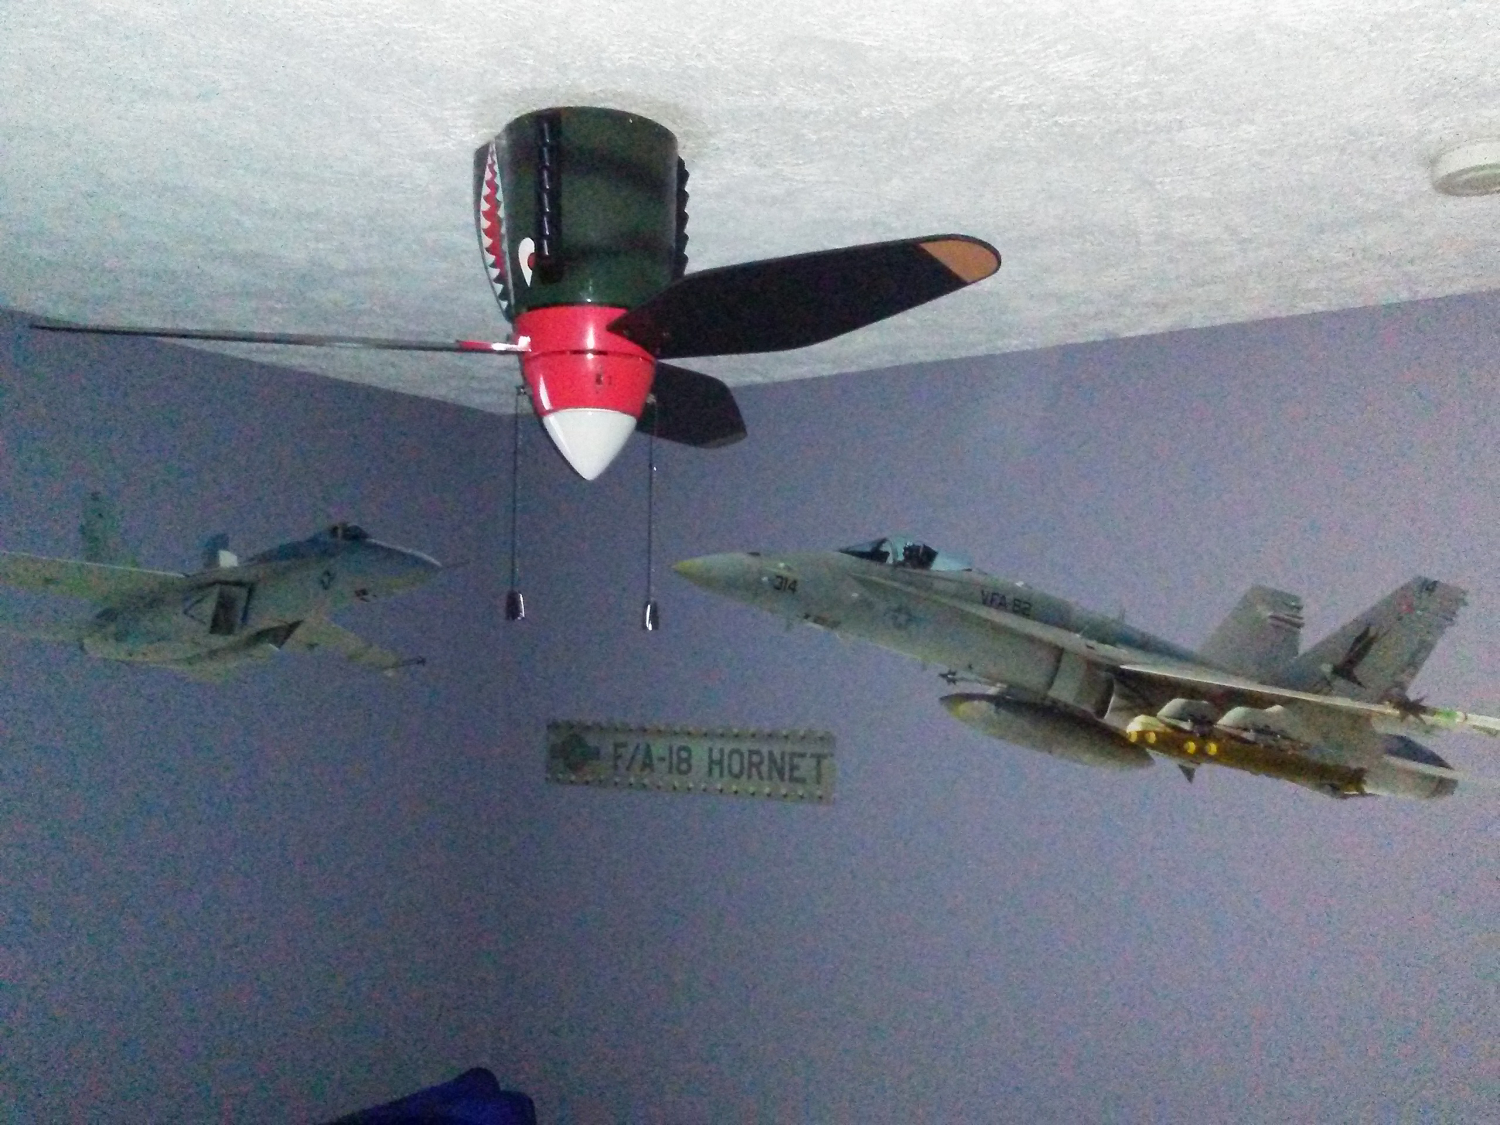 Airplane Ceiling Fan